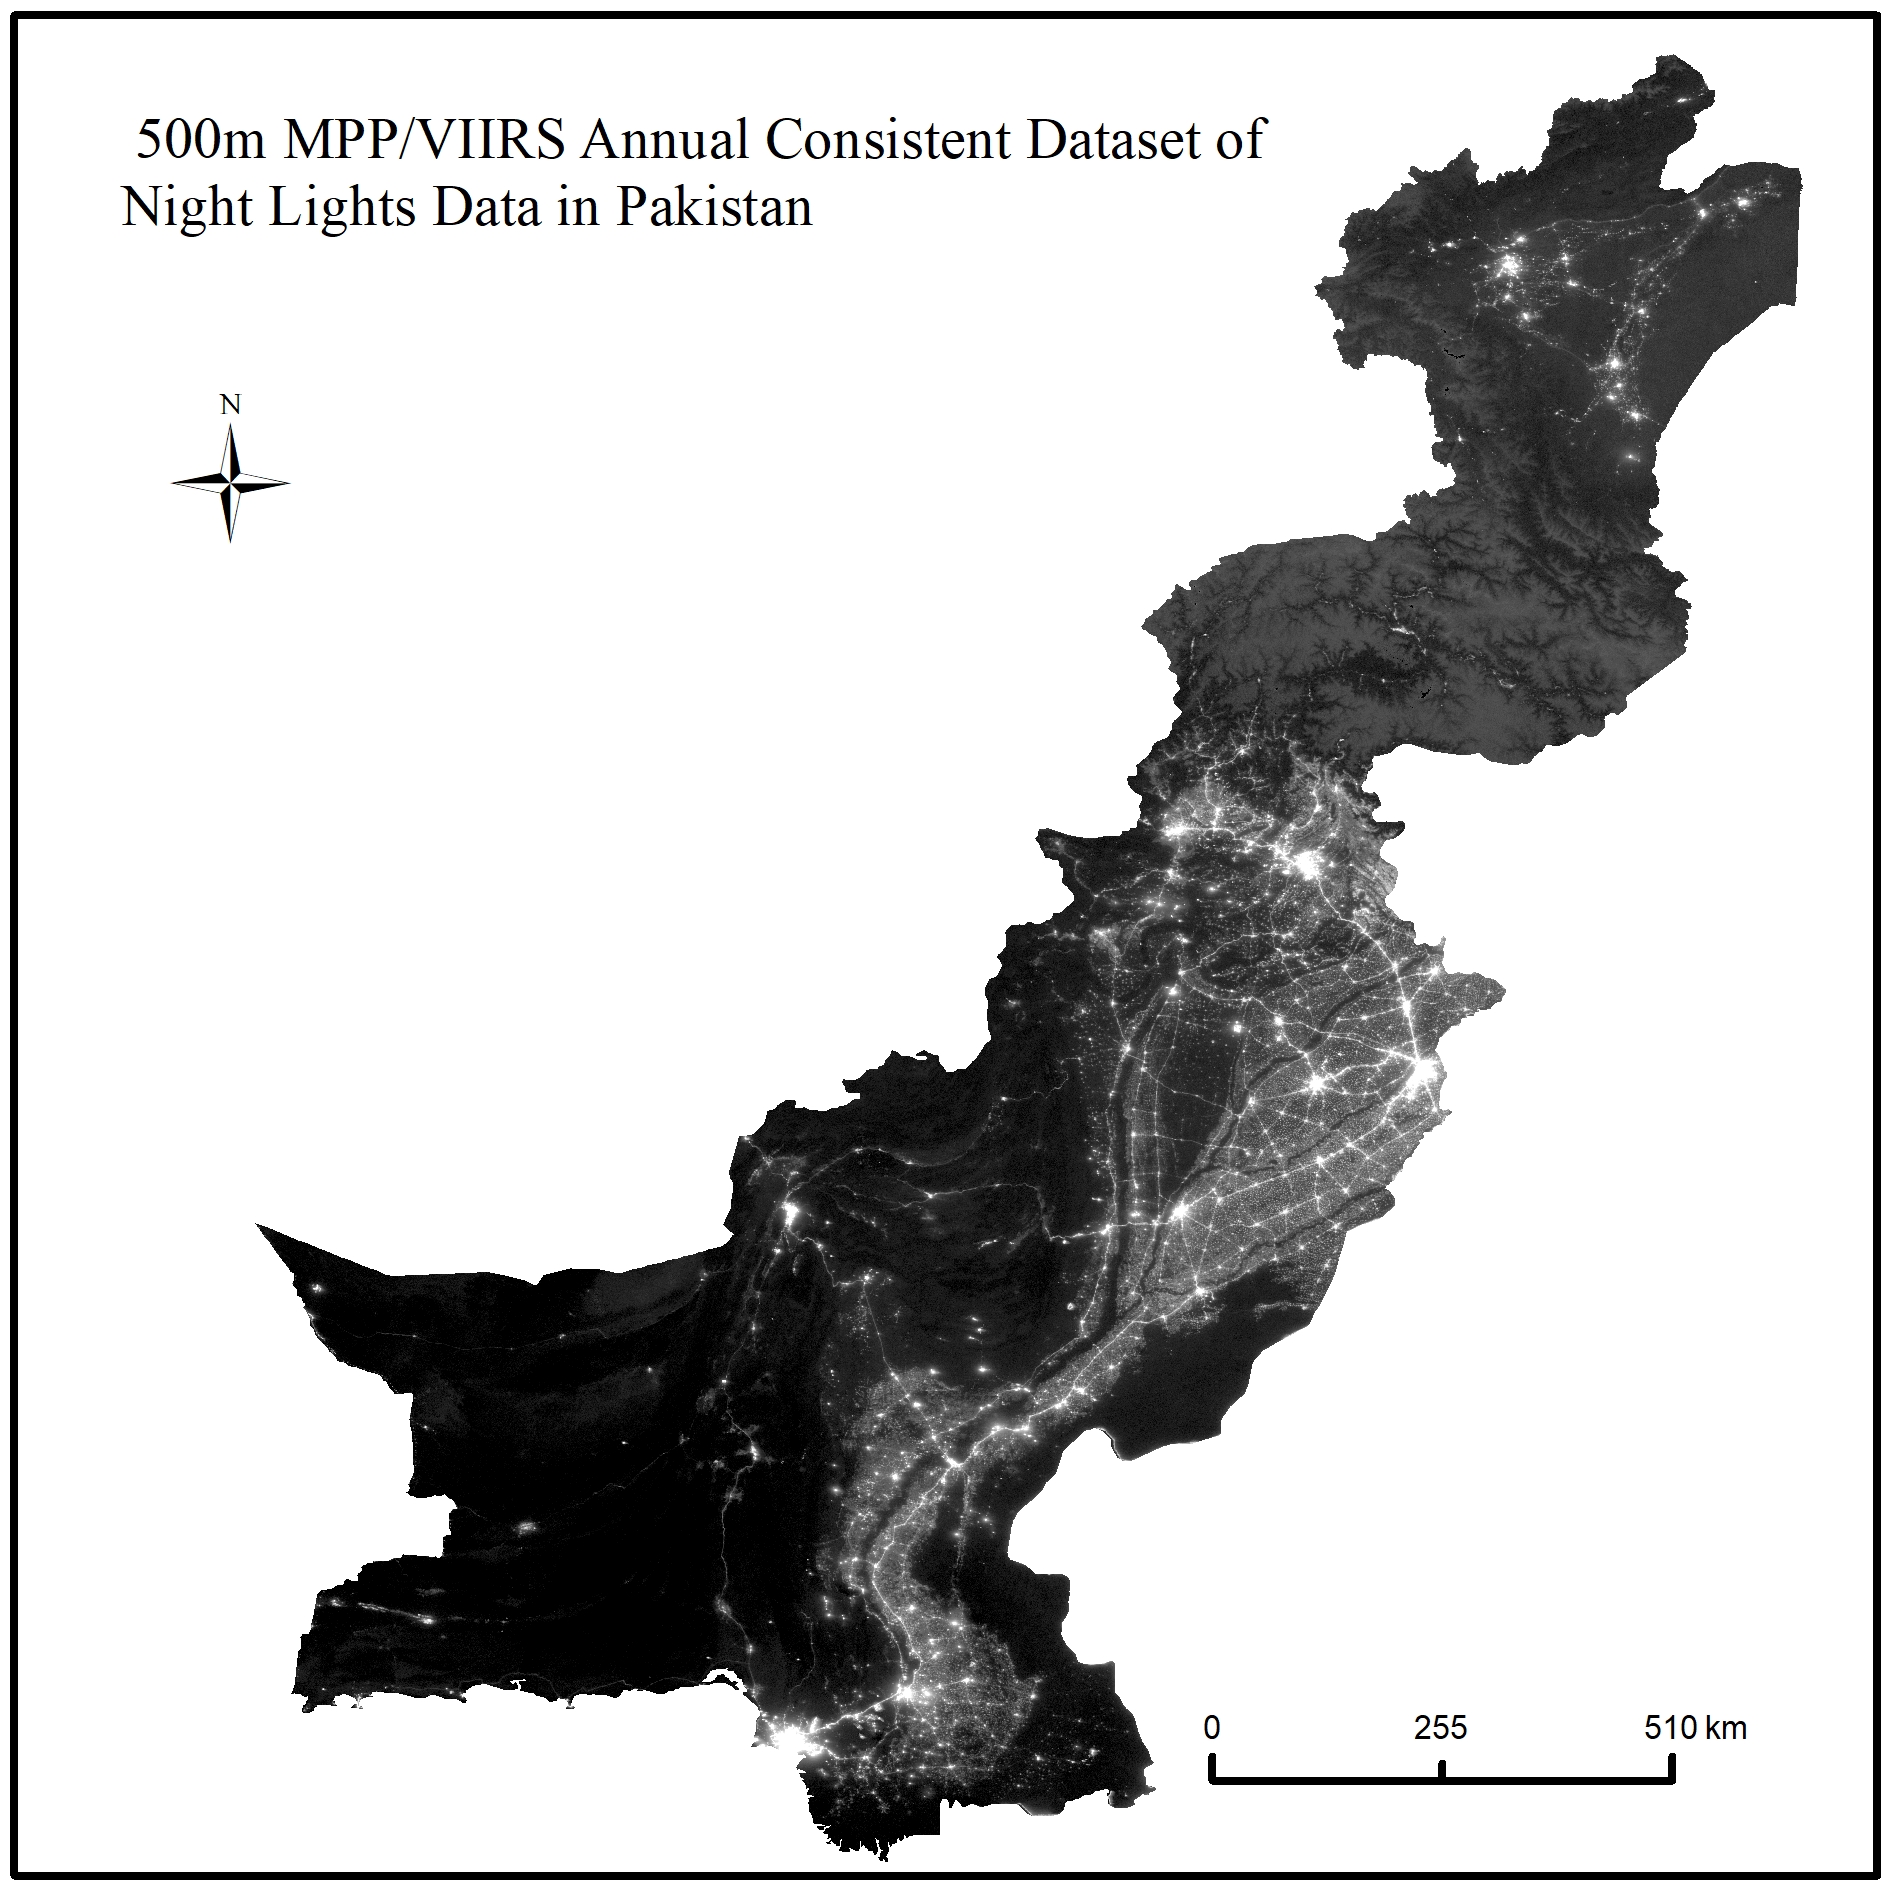 2012-2019 Annual Consistent Data Set of 500m NPPVIIRS Night Lights across Pakistan